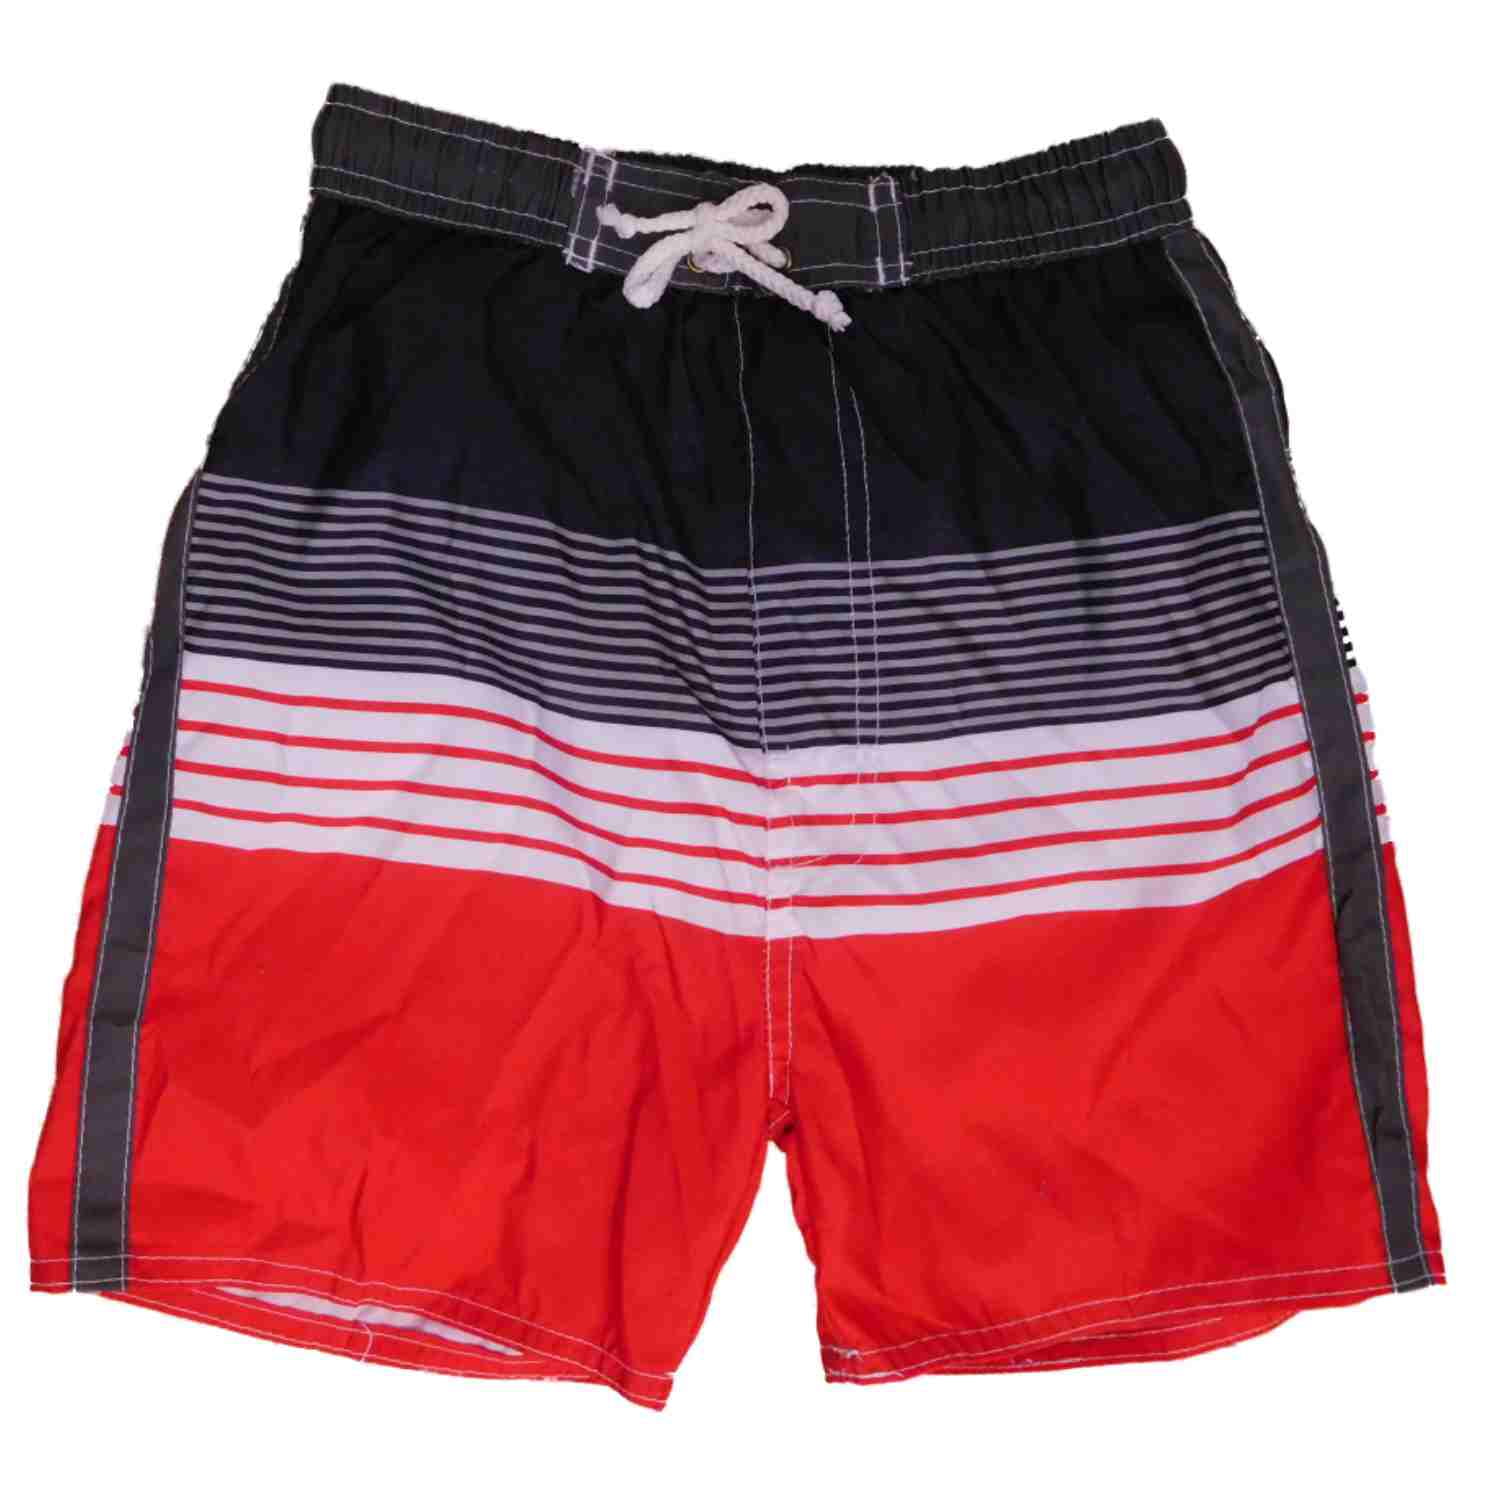 Boys Black & Red Striped Swim Trunks Board Shorts 4 - Walmart.com